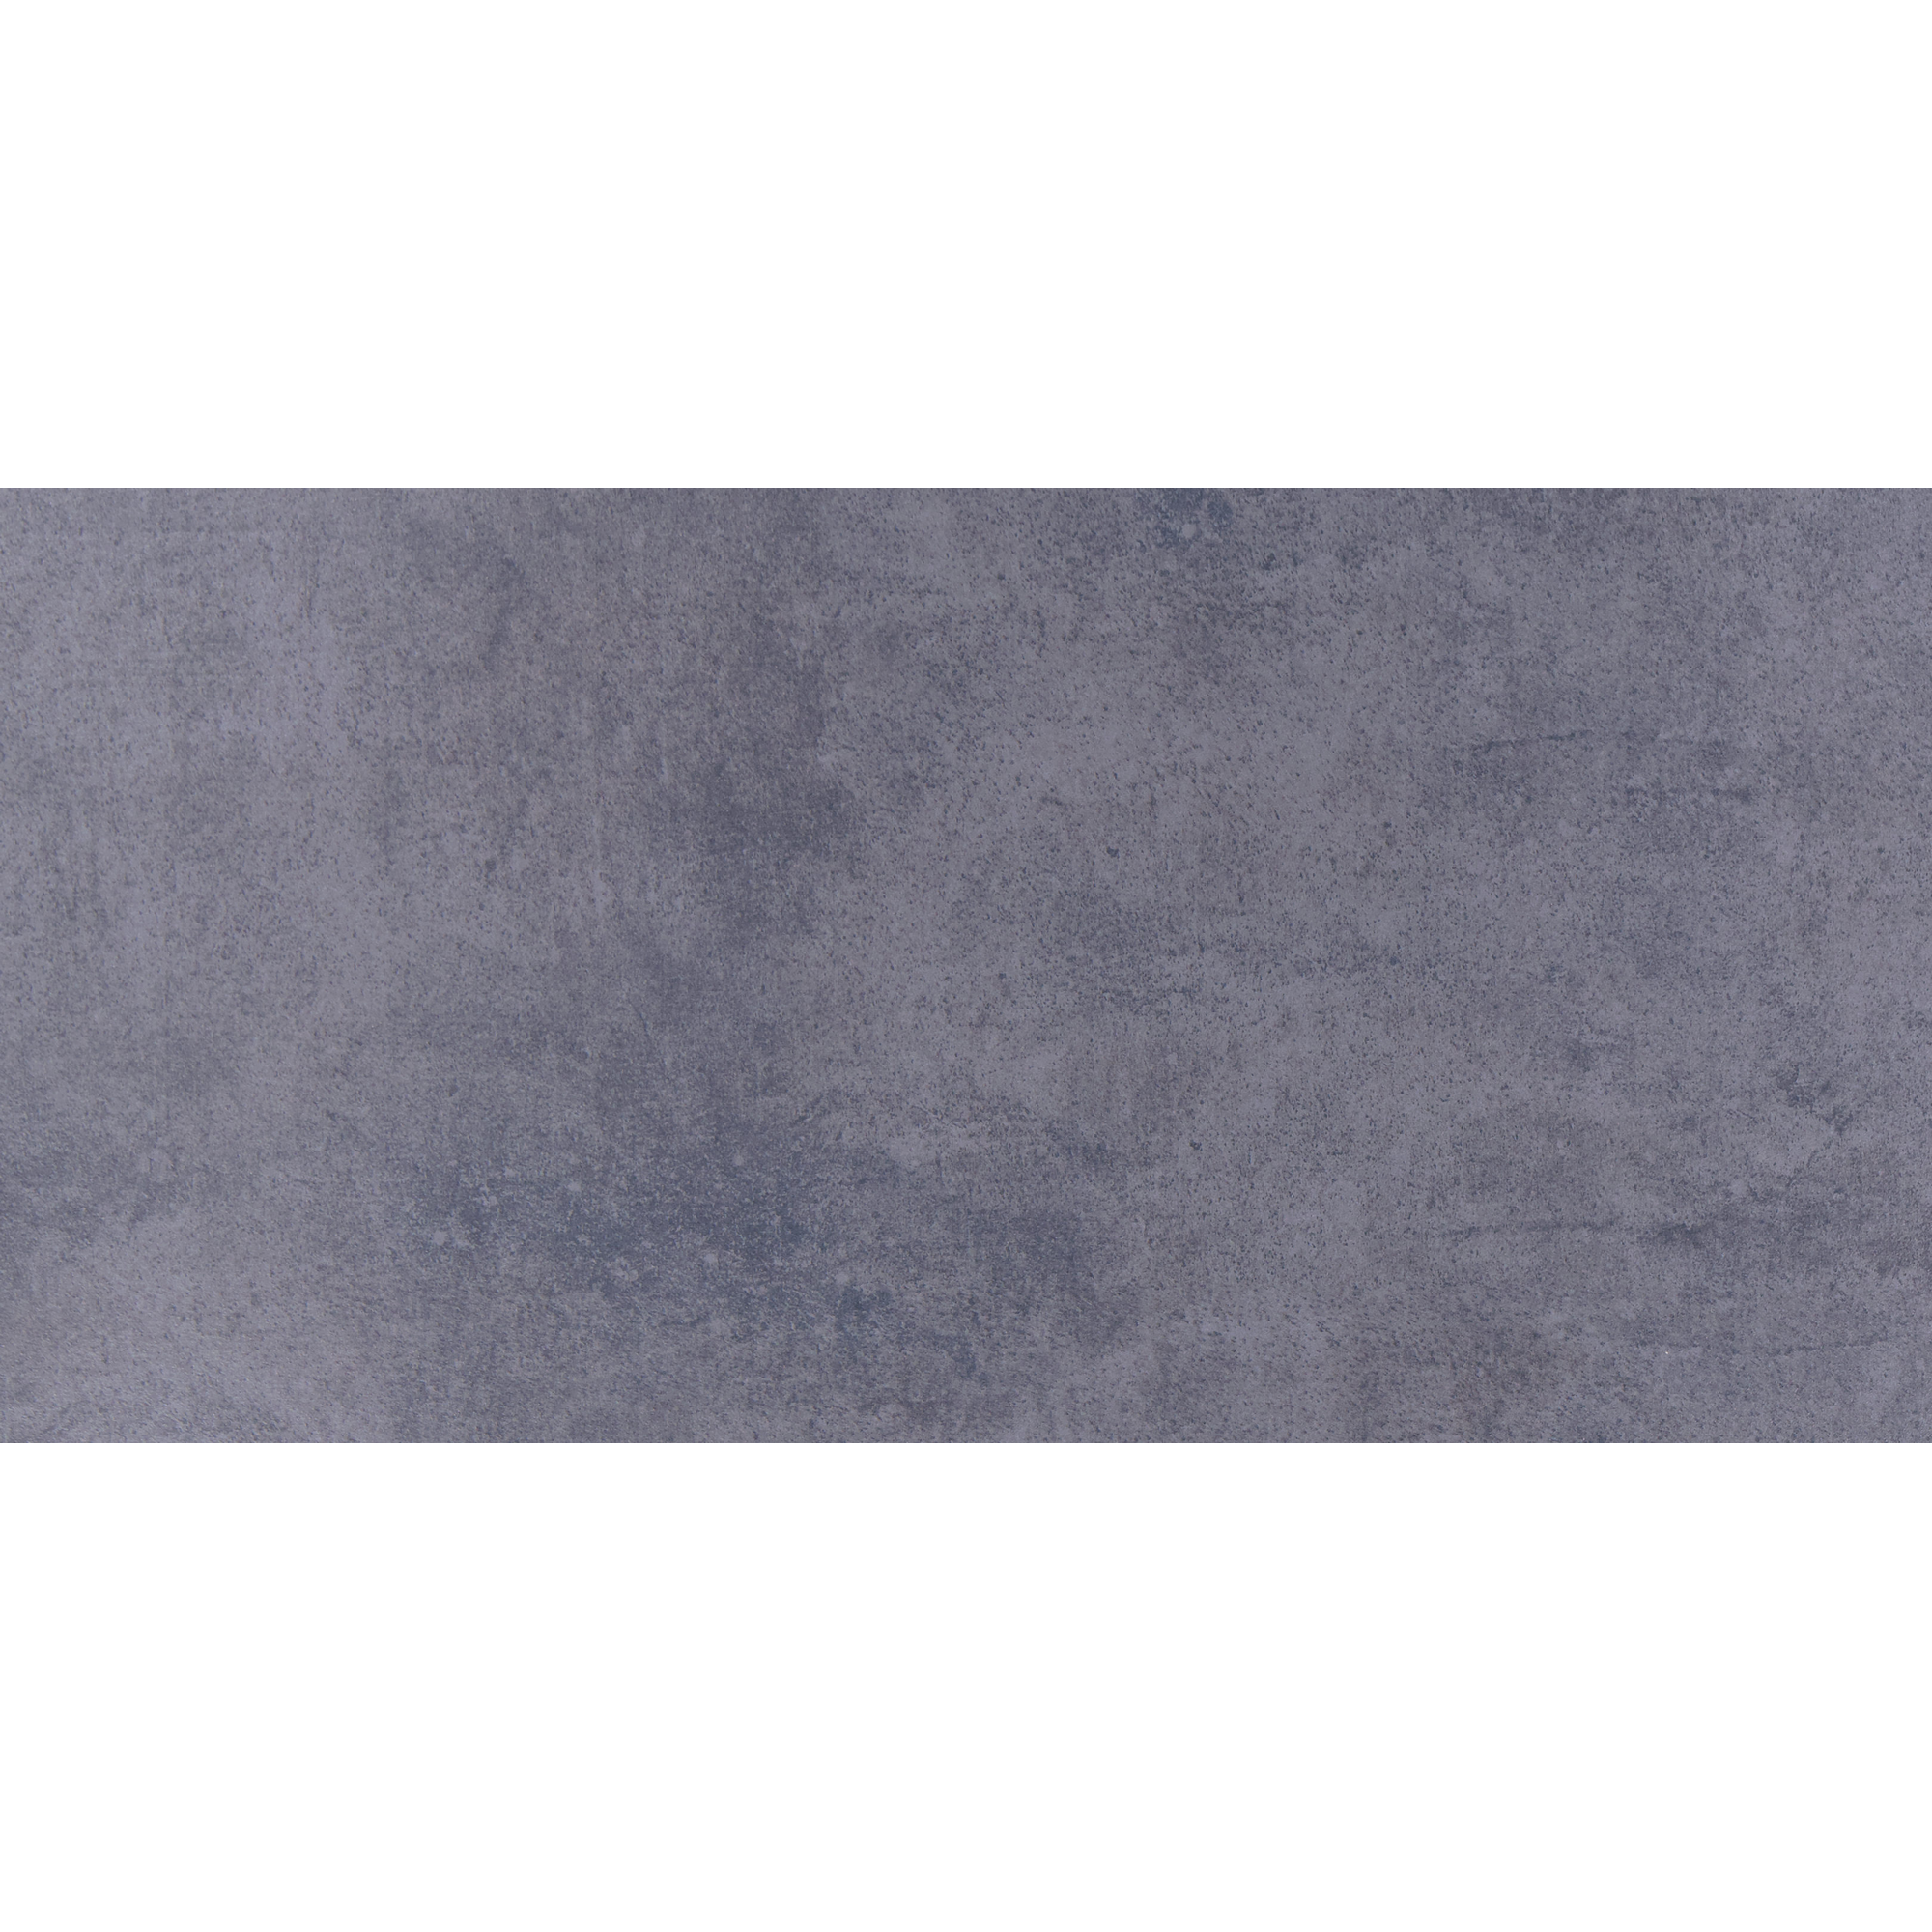 Bodenfliese 'Tempio' Feinsteinzeug anthrazit 30,2 x 60,4 cm + product picture